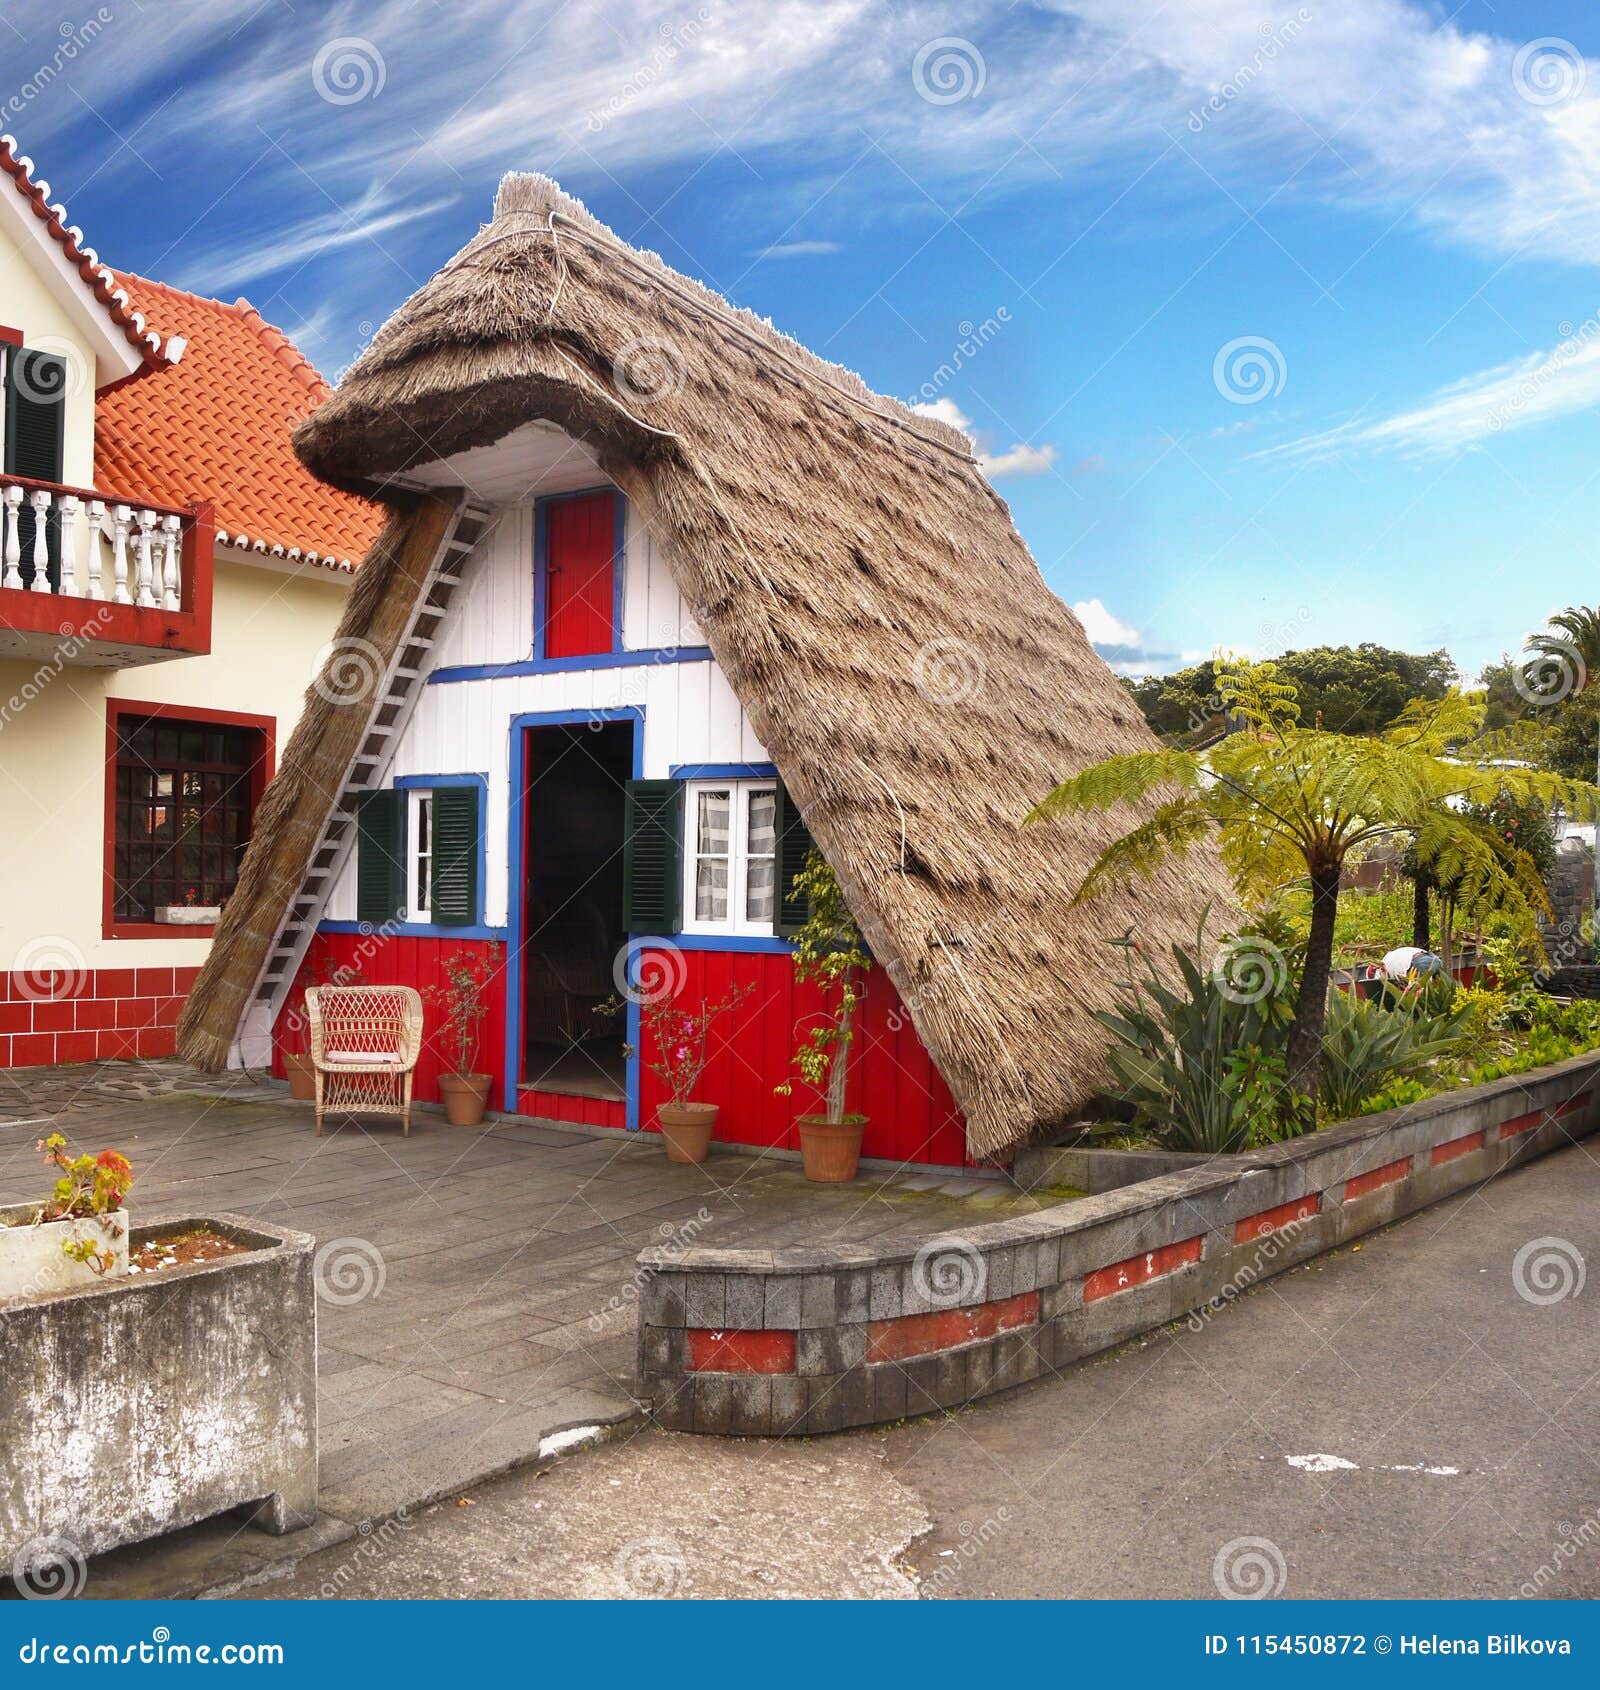 madeira santana old house, portugal